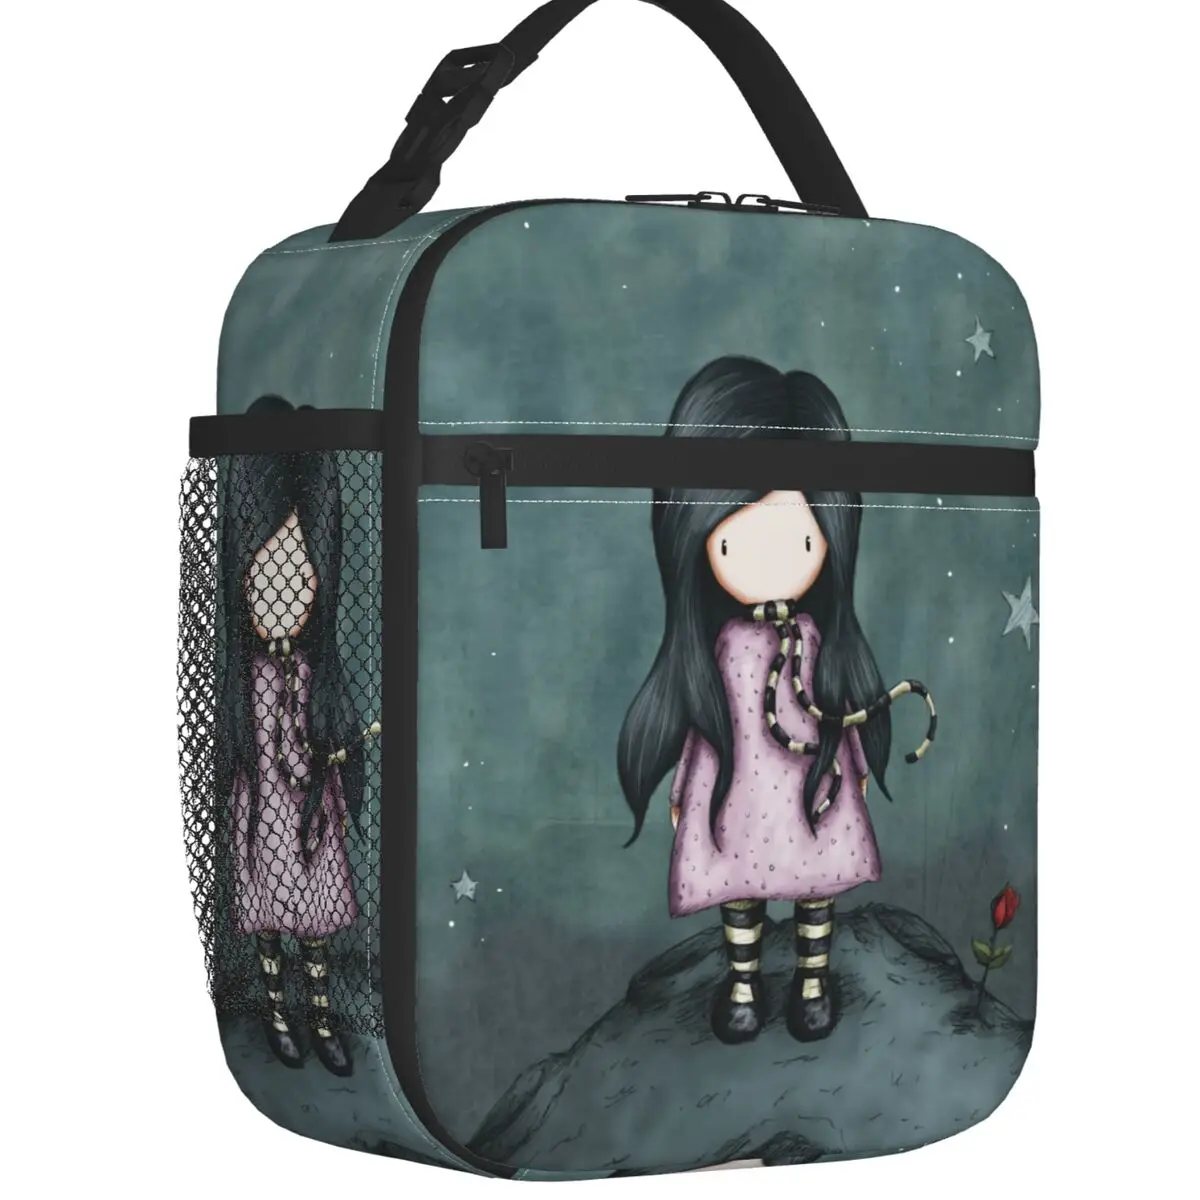 Coque Art Cartoon Santoro Gorjuss Insulated Lunch Bag for Women Waterproof Thermal Cooler Bento Box Beach Camping Travel